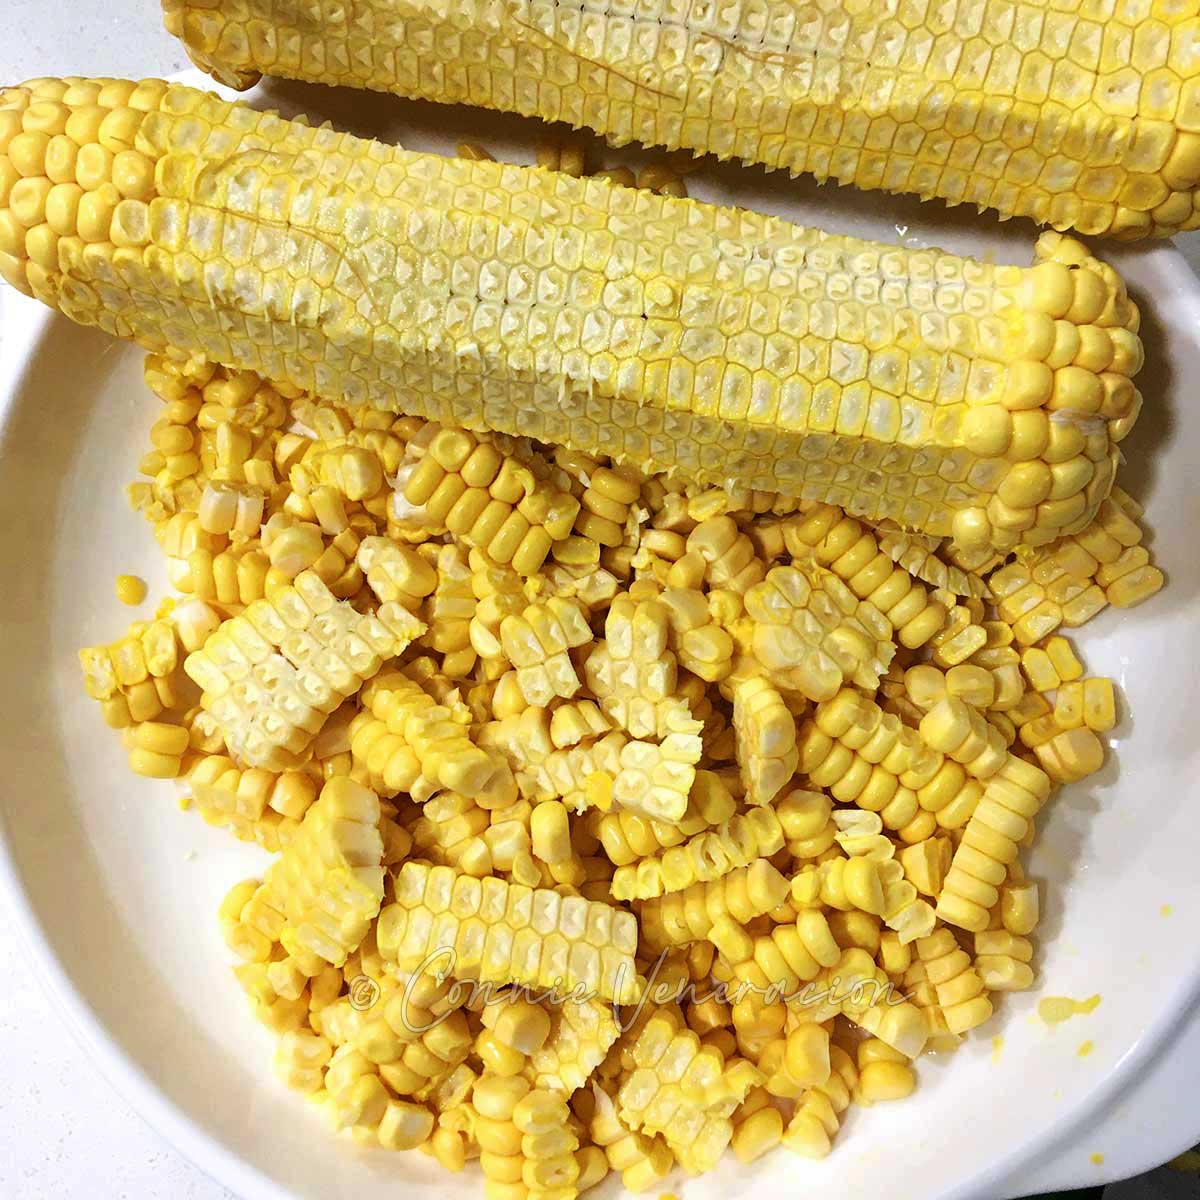 Two ears of corn, shredded